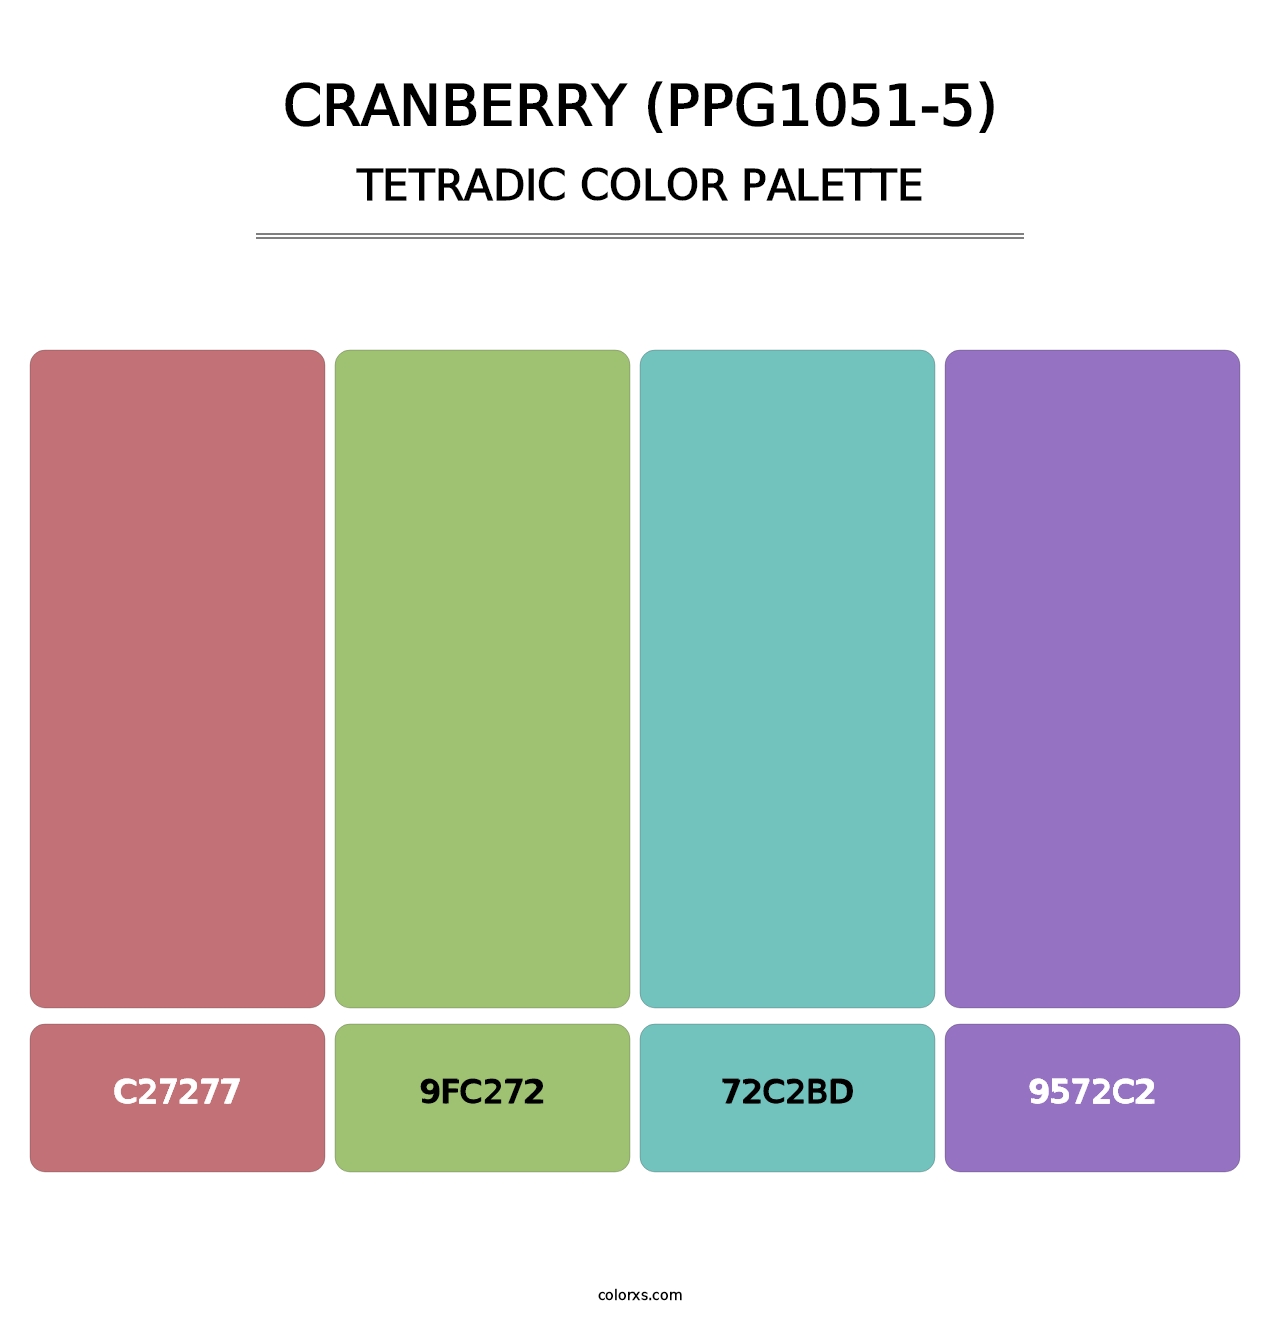 Cranberry (PPG1051-5) - Tetradic Color Palette